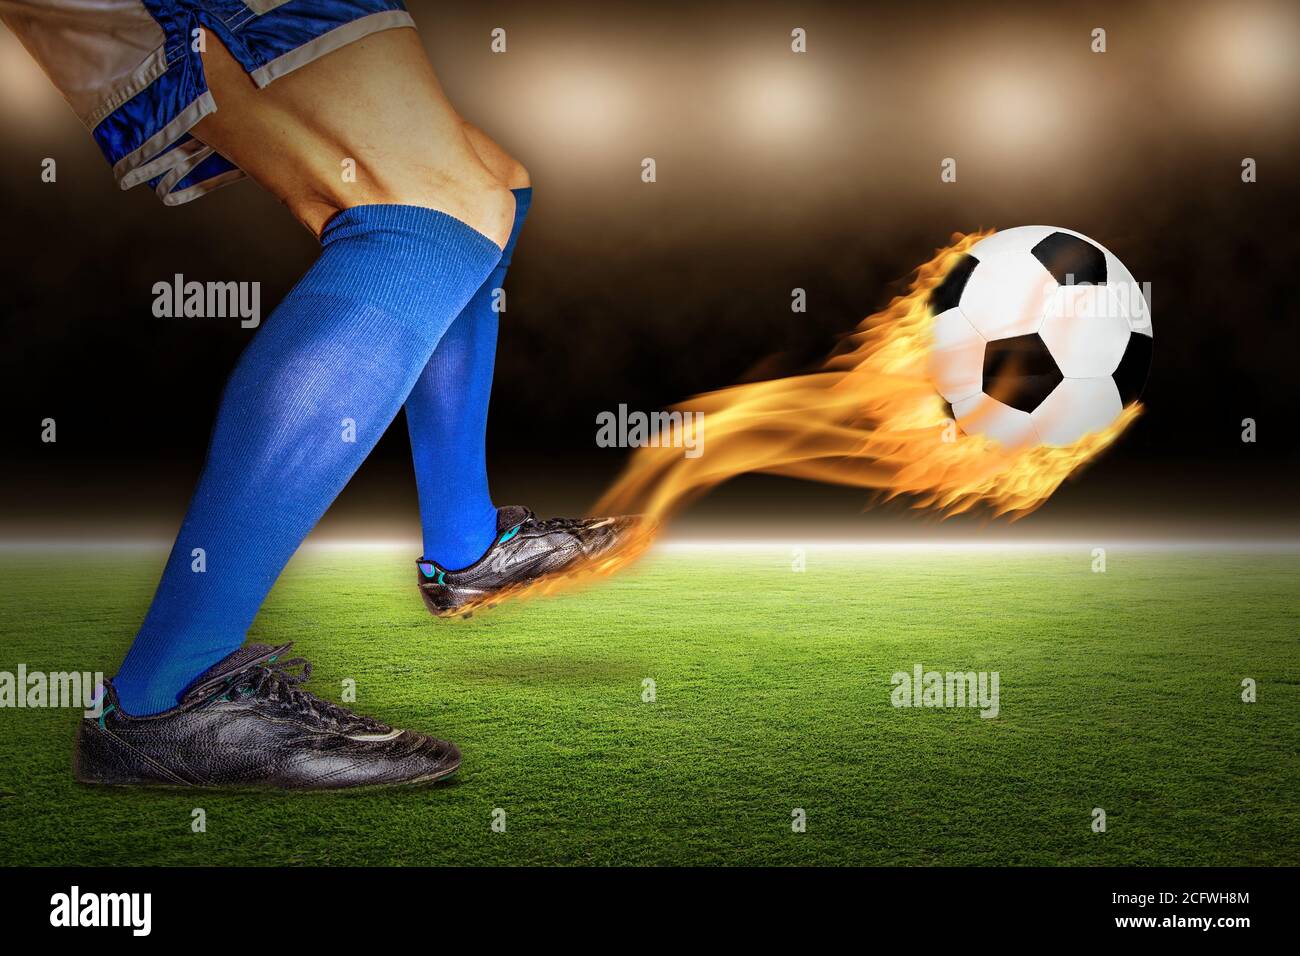 Un joueur de football a fait voler un ballon de football flamboyant dans un stade. Banque D'Images